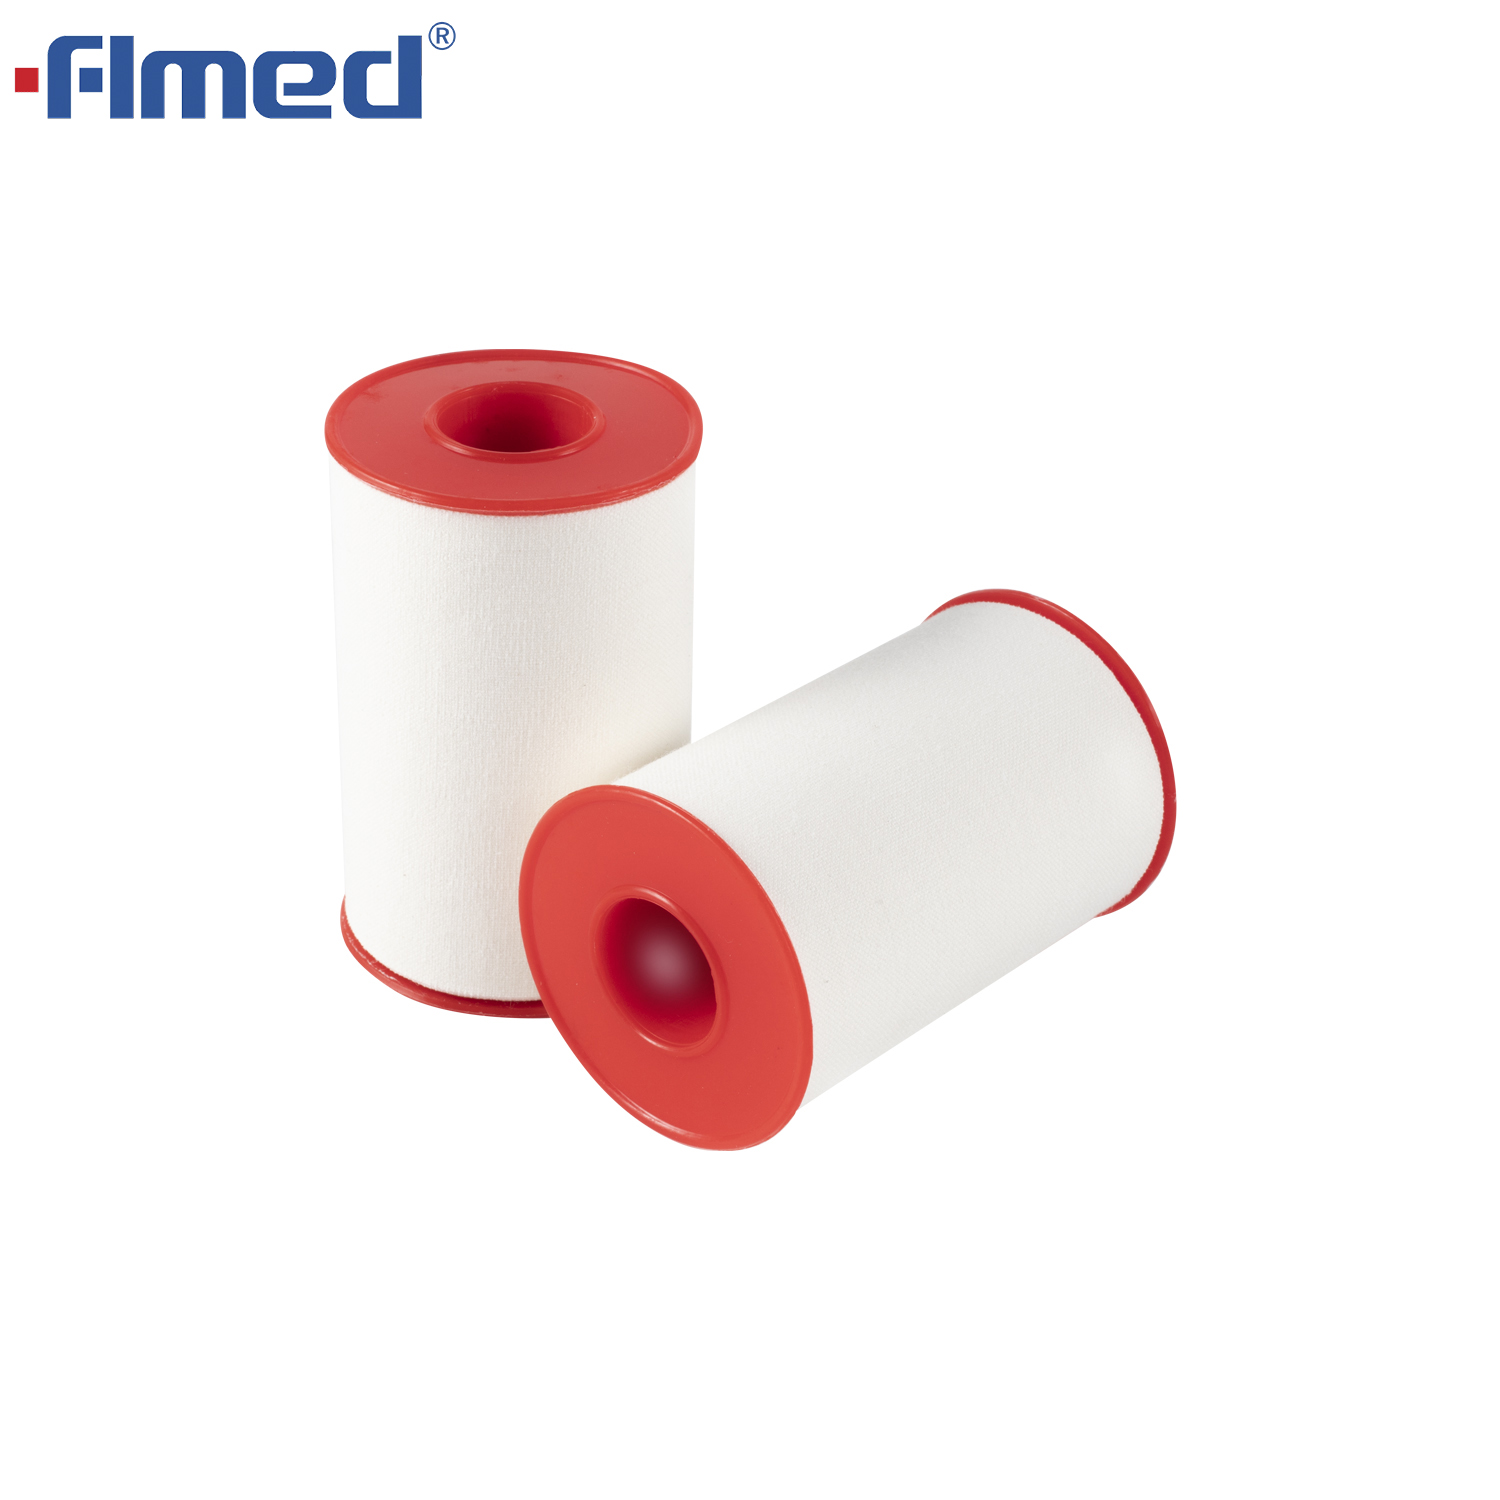 bandage plaster tape